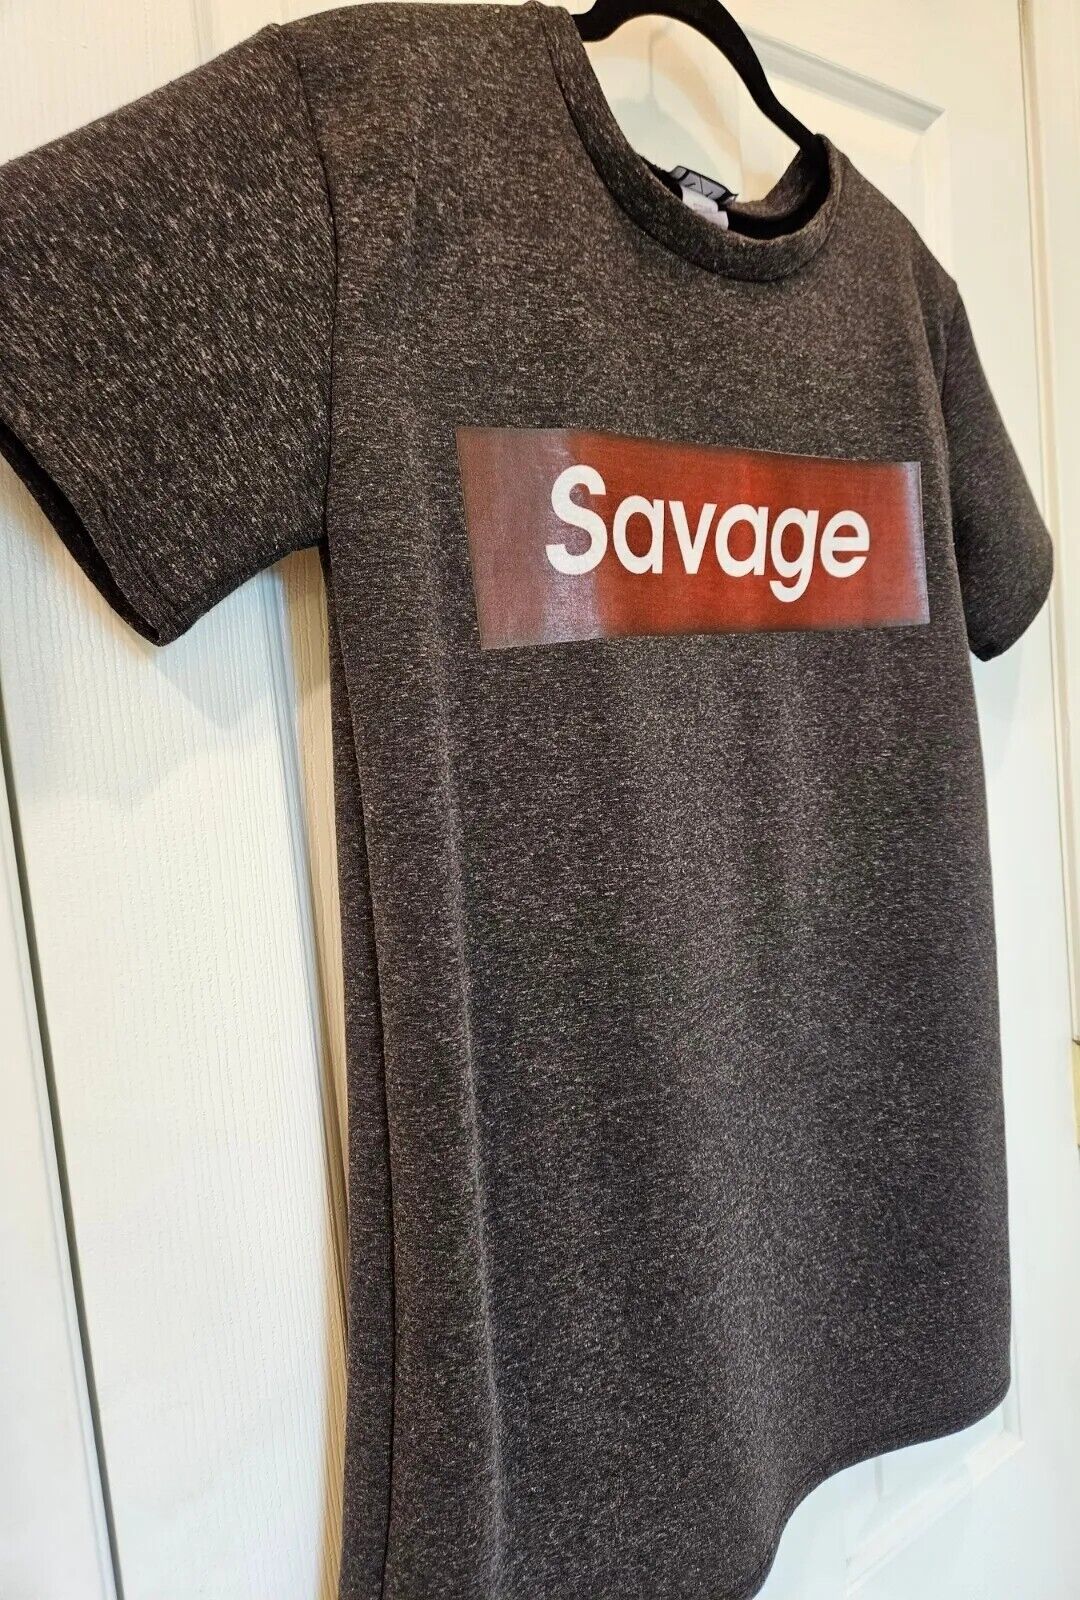 Ring Of Fire “Savage” ROF 3D Imprint MEDIUM t-shirt Black Gray Supreme Red Box